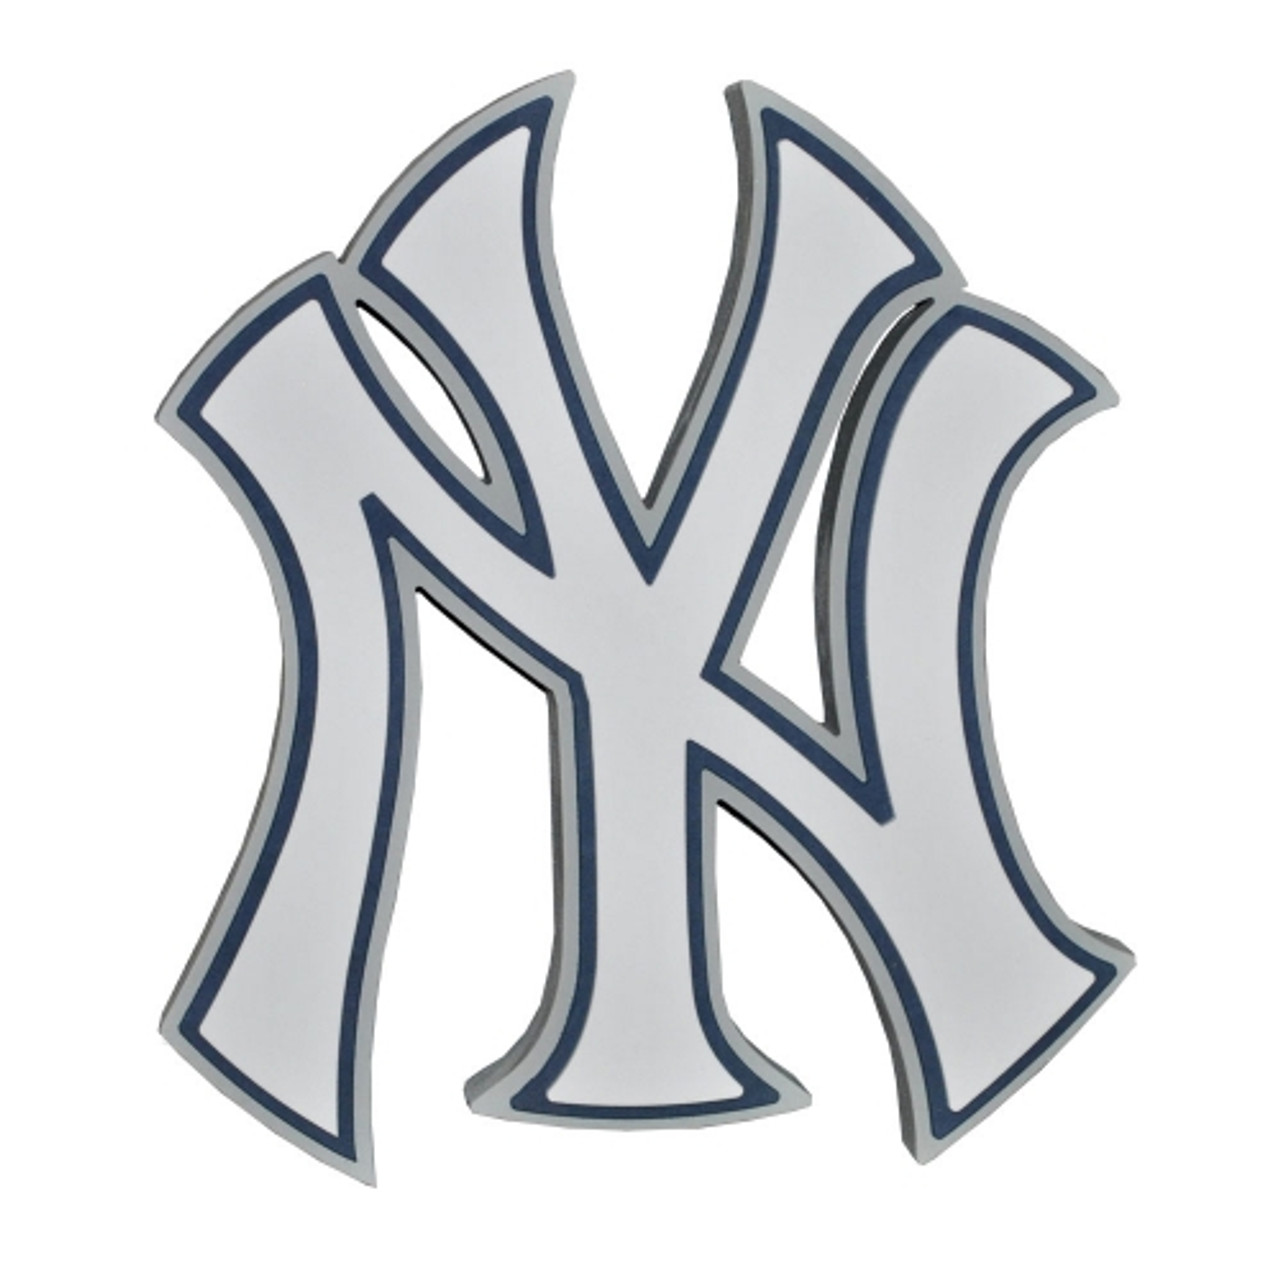 New York Yankees 10-Inch Team Logo Glove